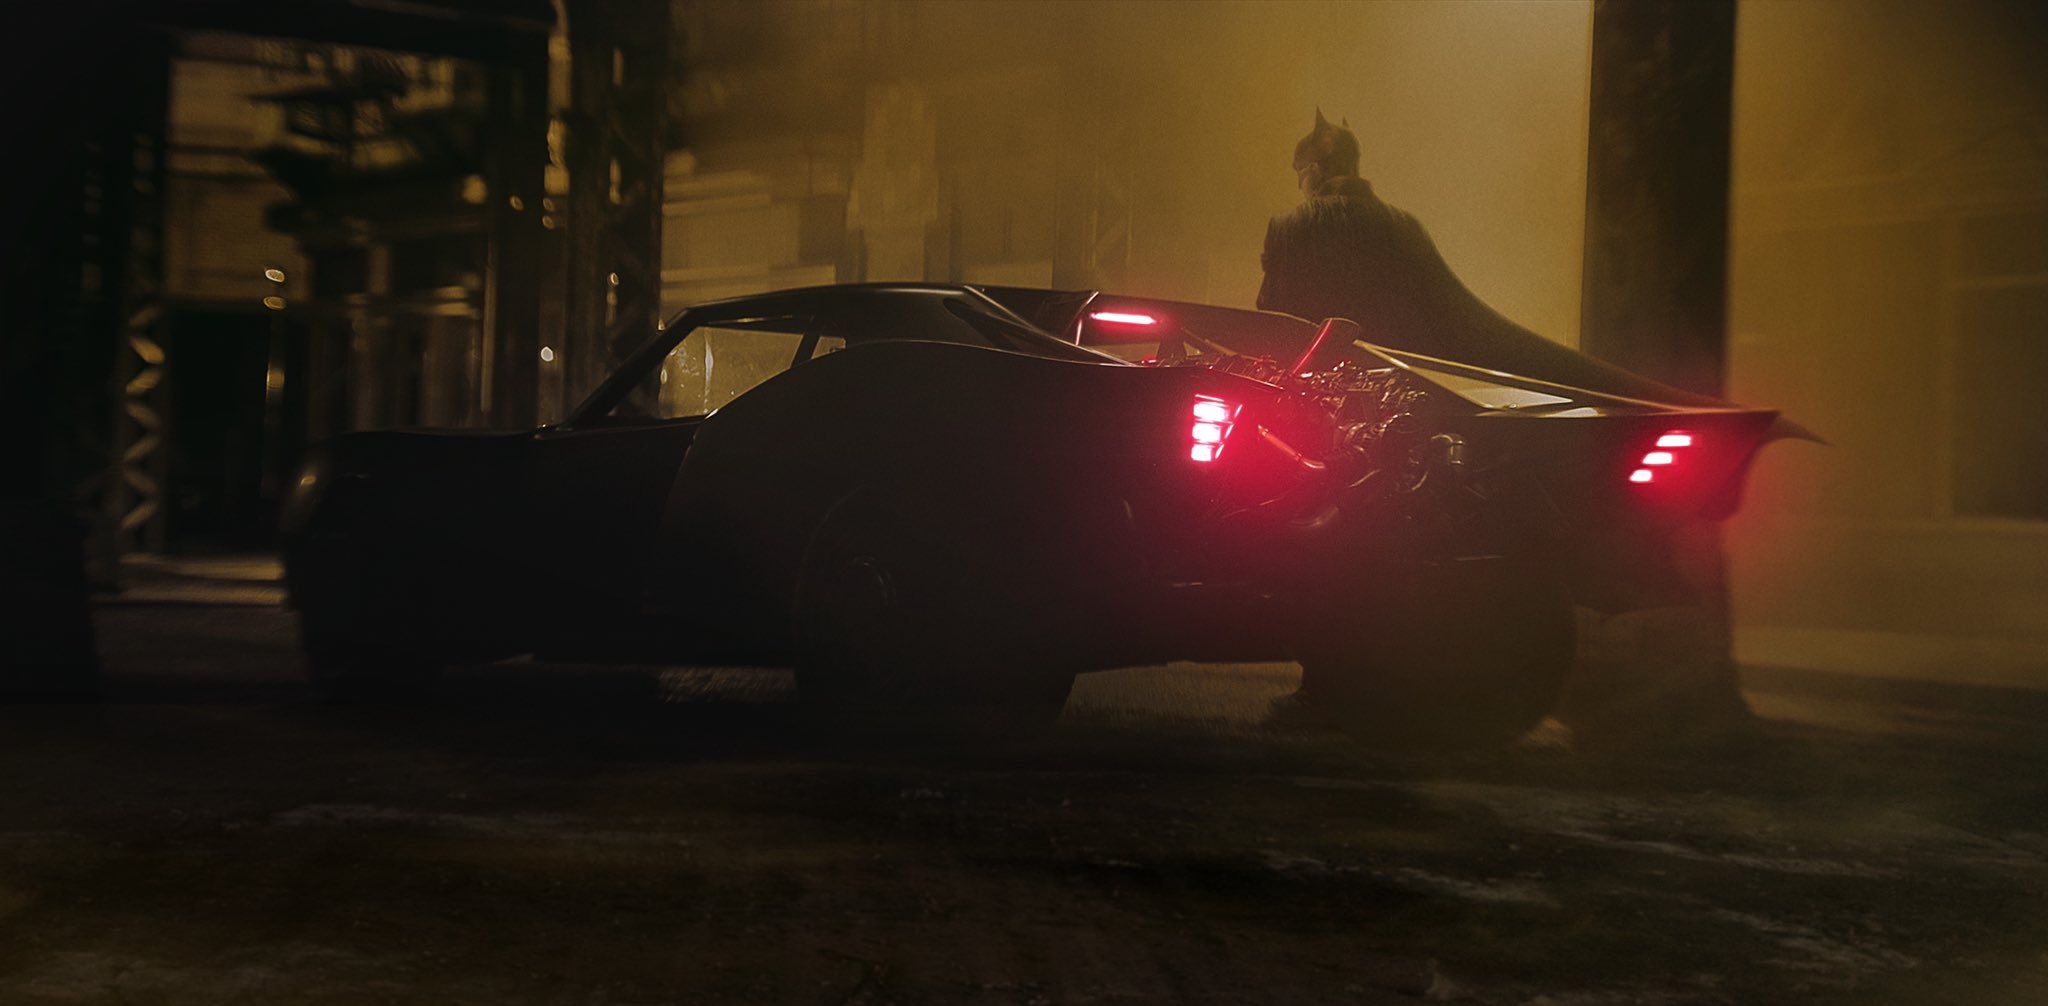 The Batman: Batmobile Image Revealed by Director Matt Reeves